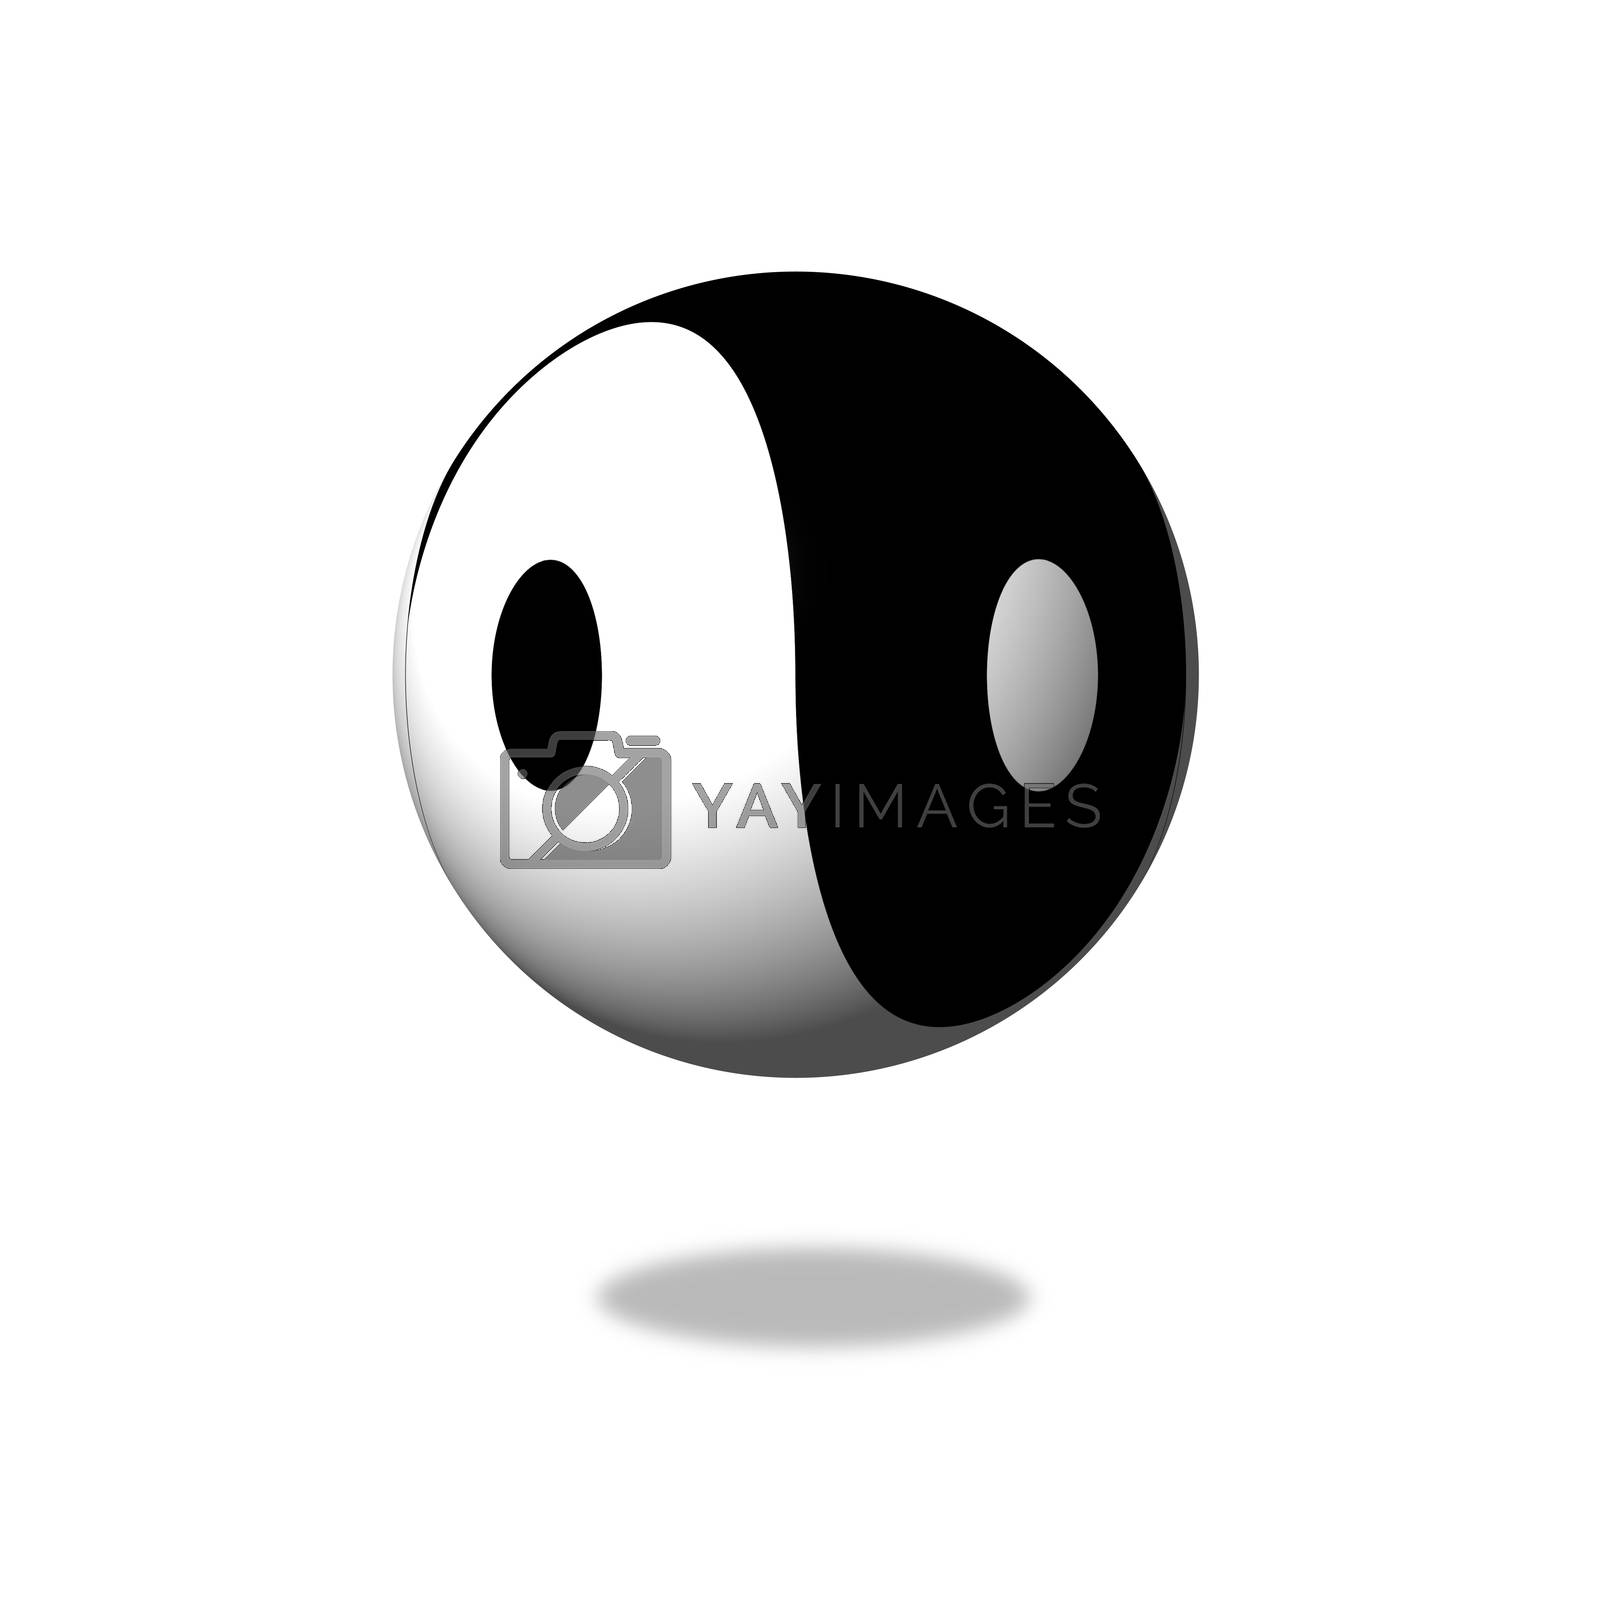 Royalty free image of Yin Yang by hlehnerer